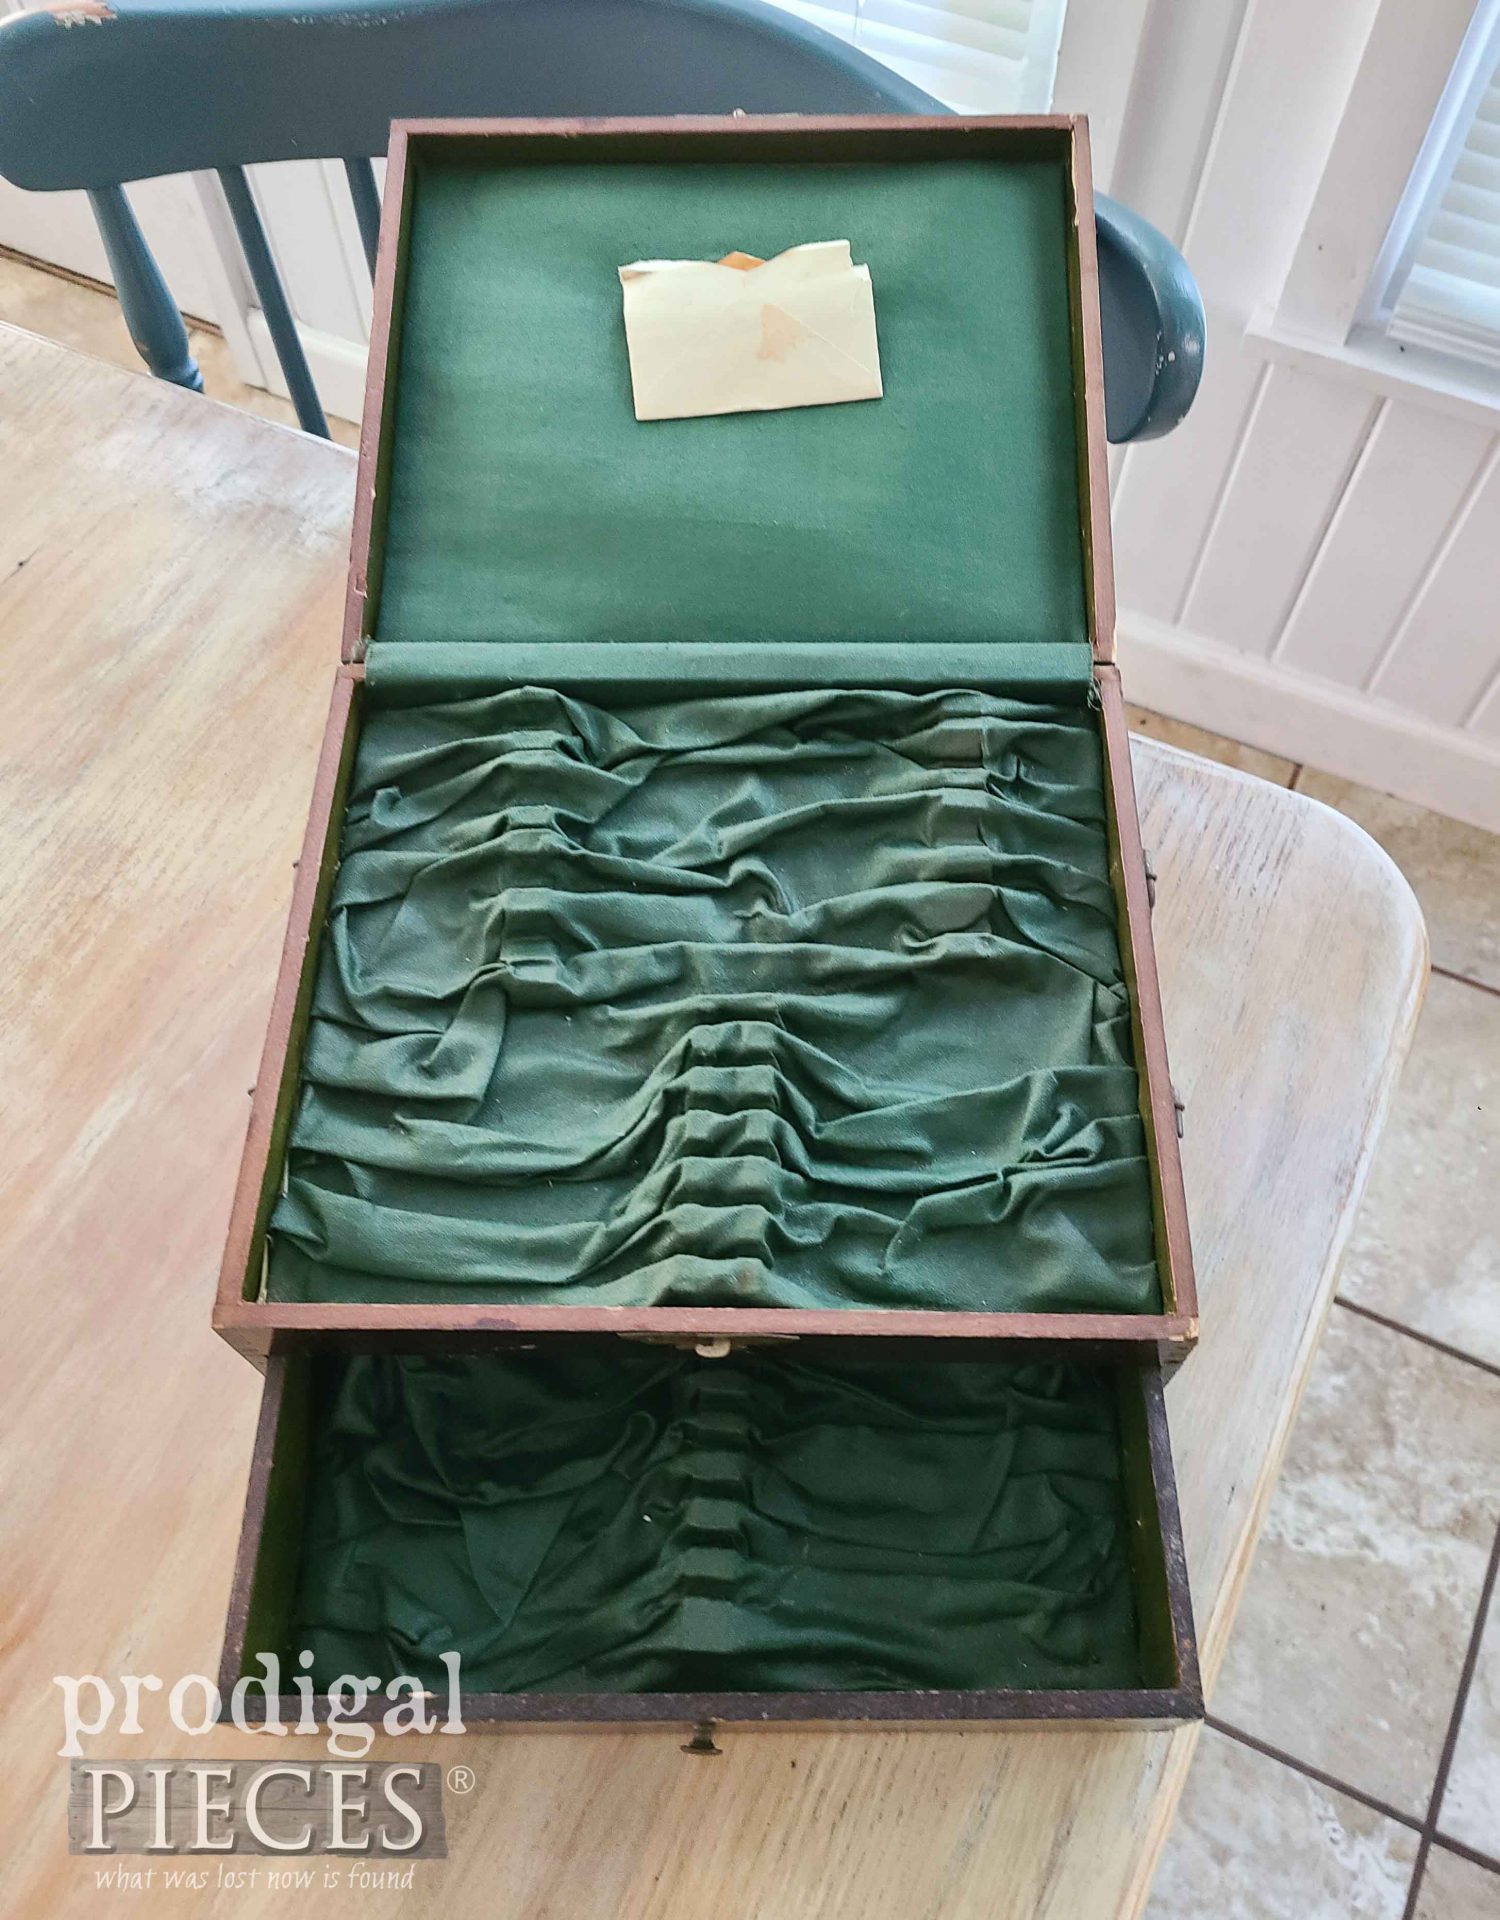 Inside Open Vintage Silverware Box for DIY Jewelry Box | prodigalpieces.com #prodigalpieces